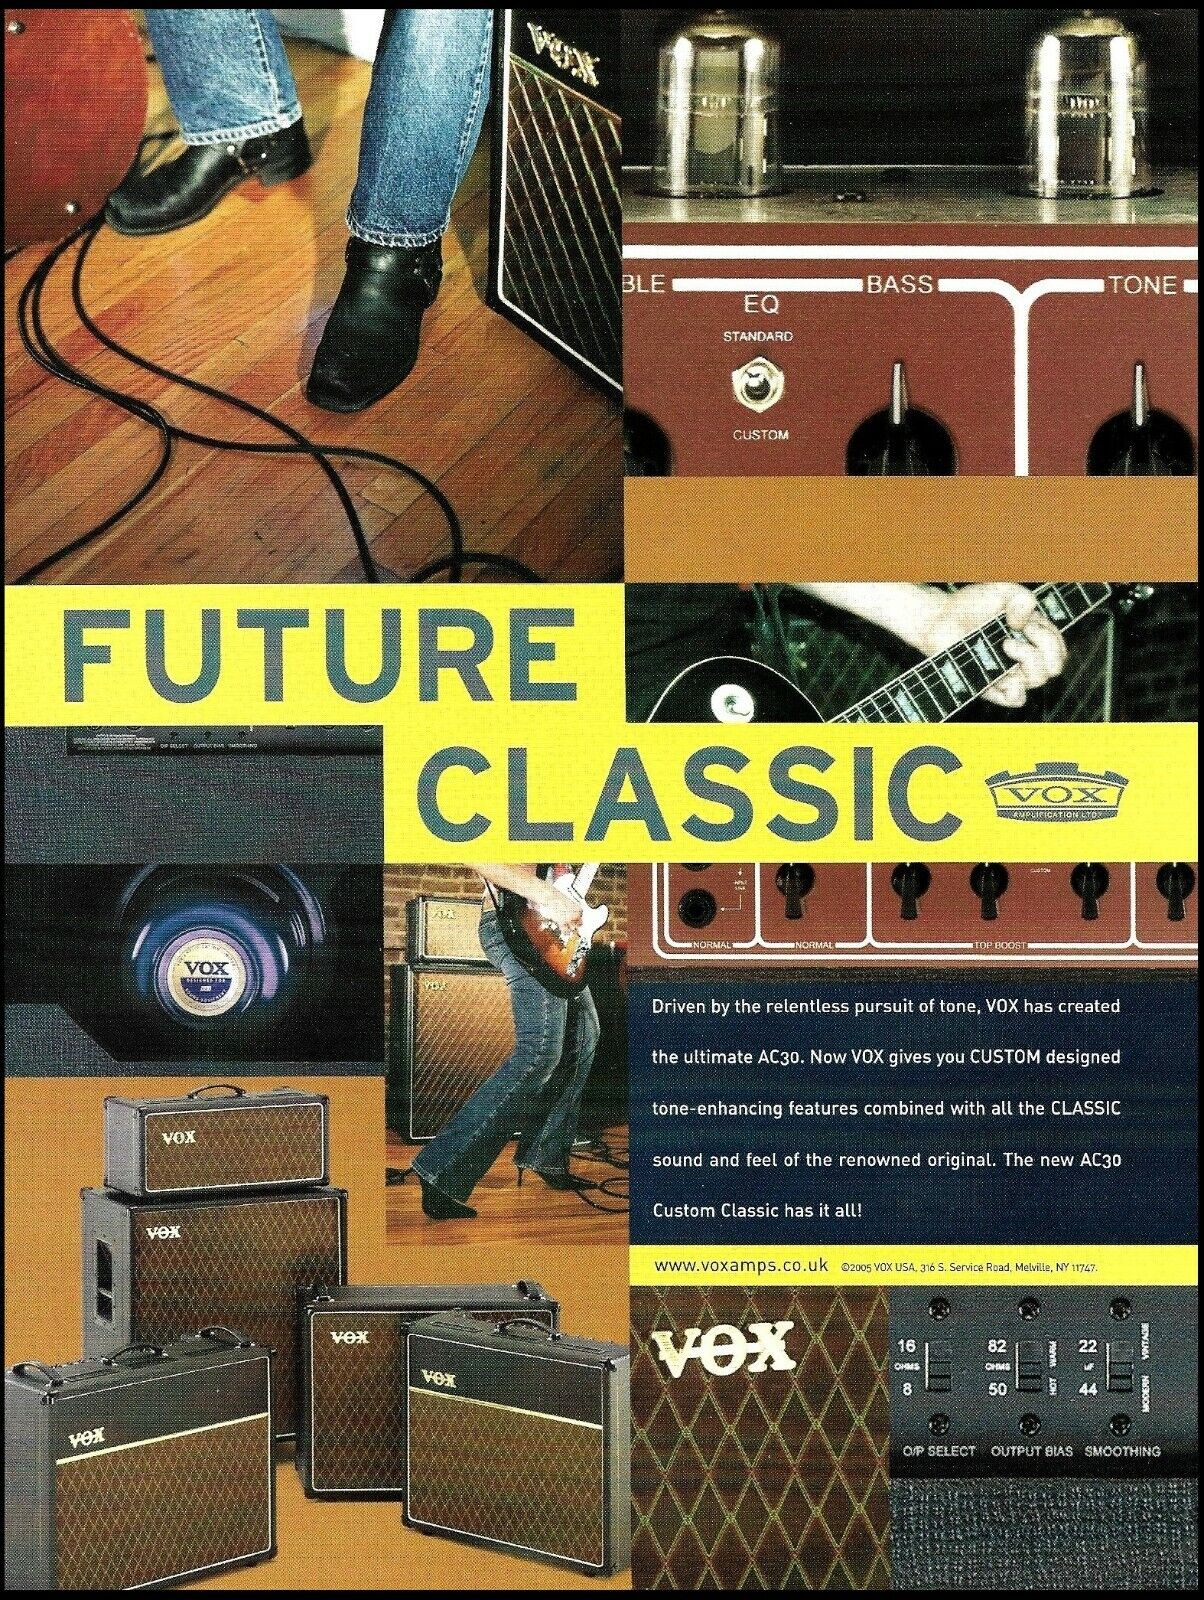 2005 Vox AC30 amplifier series advertisement original 8 x 11 amp ad print